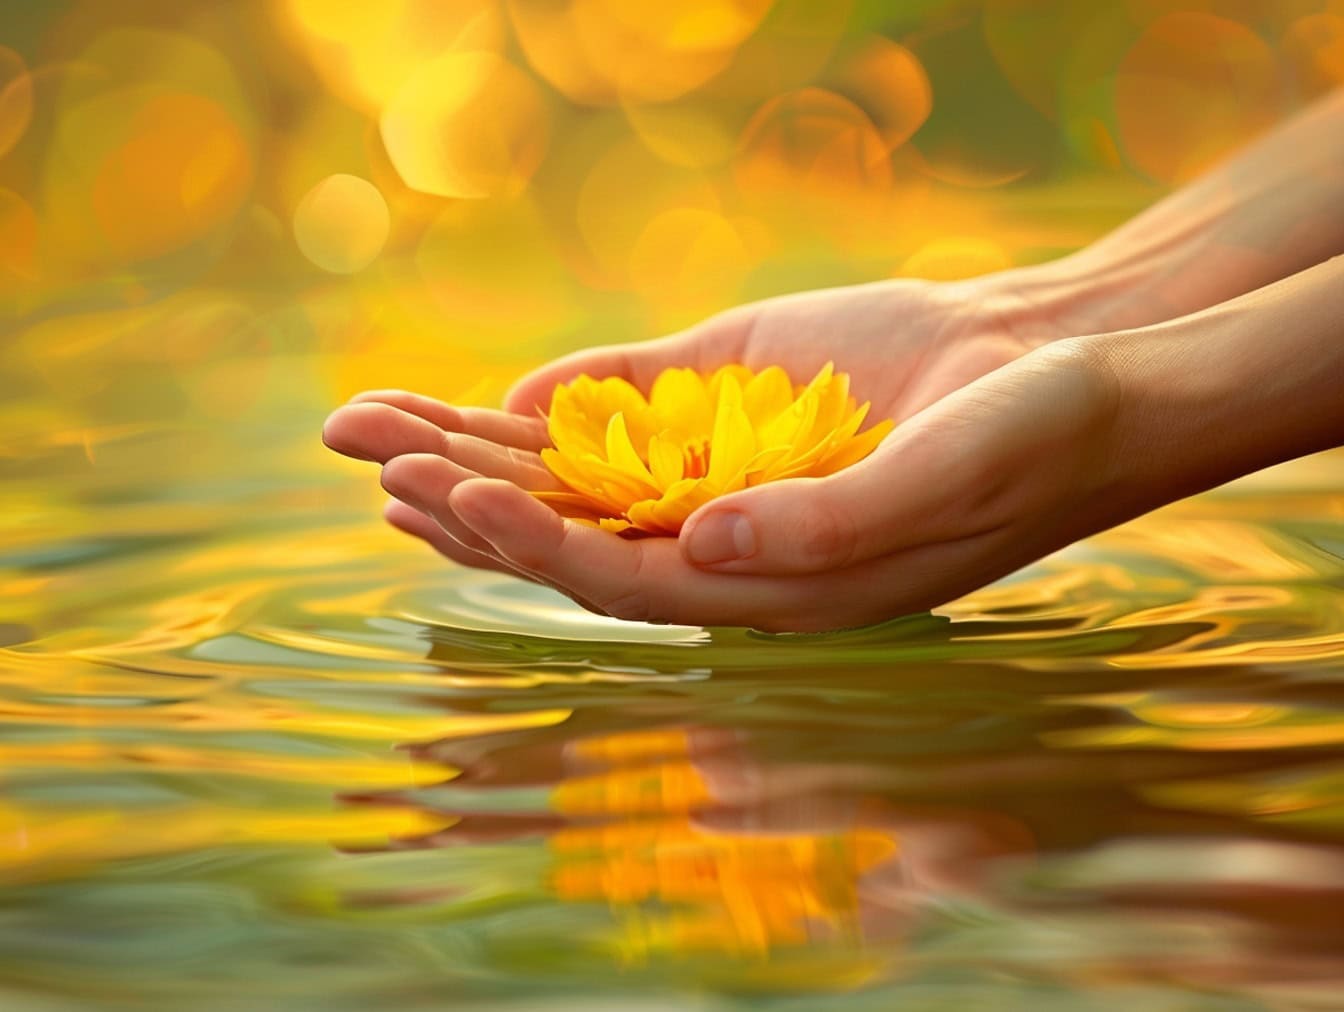 Seseorang memegang bunga teratai kuning di tangan tepat di atas air, ilustrasi ketenangan dan kedamaian